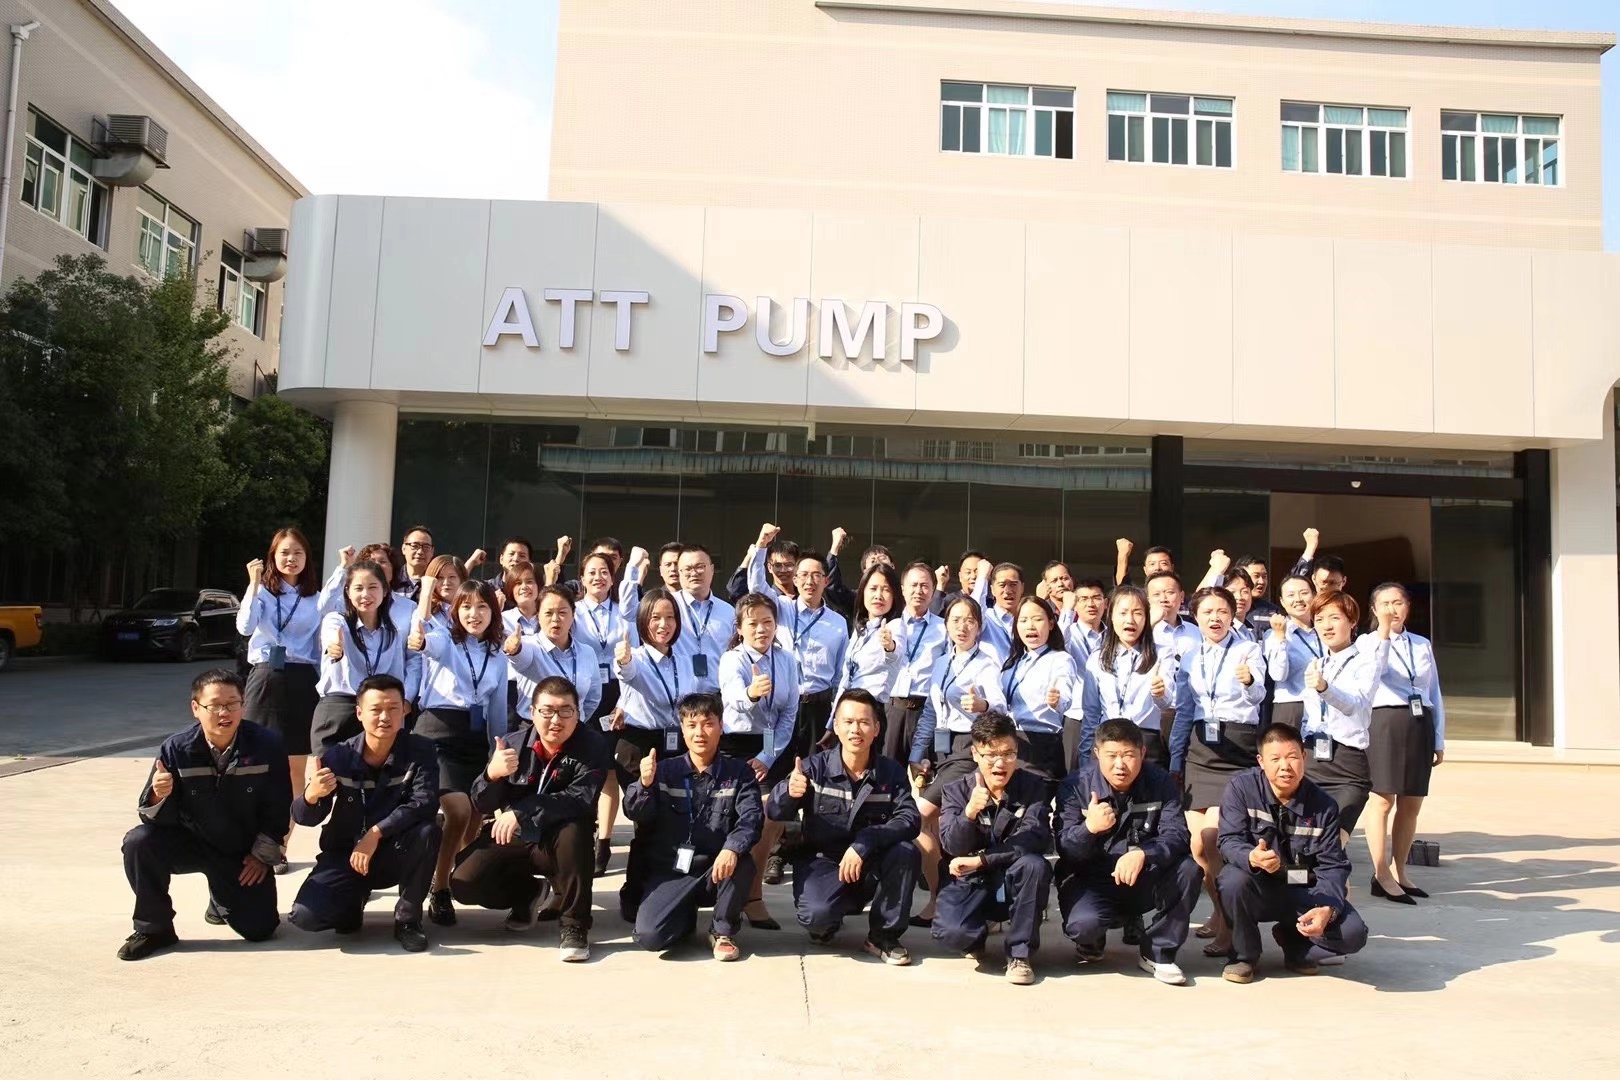 ATT PUMP|埃梯梯智慧水务科技有限公司启航了